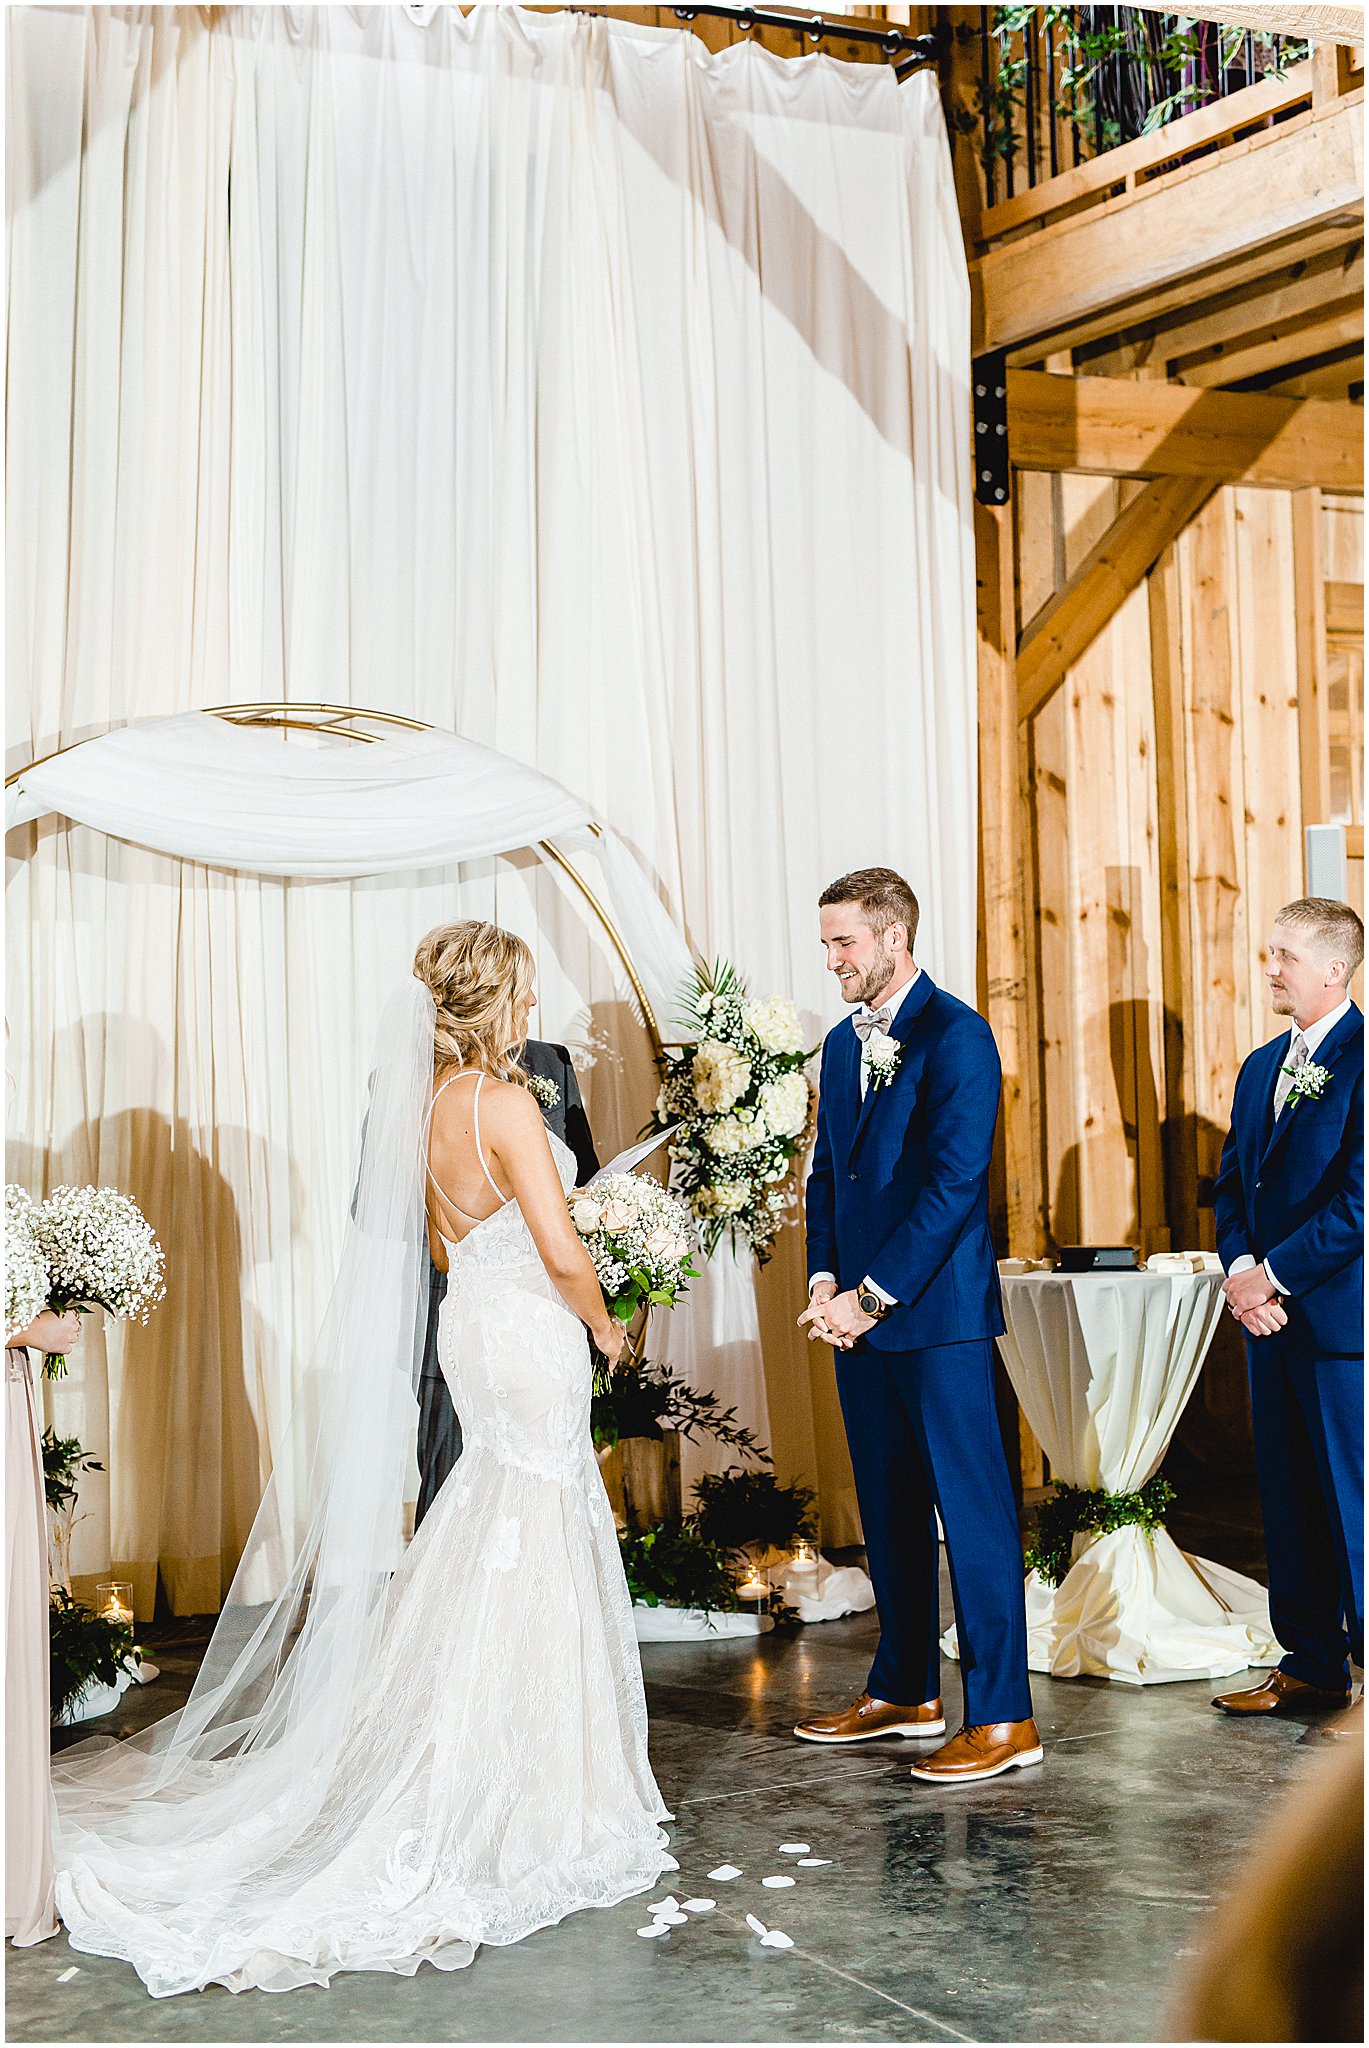 Aquila Barn indoor wedding ceremony